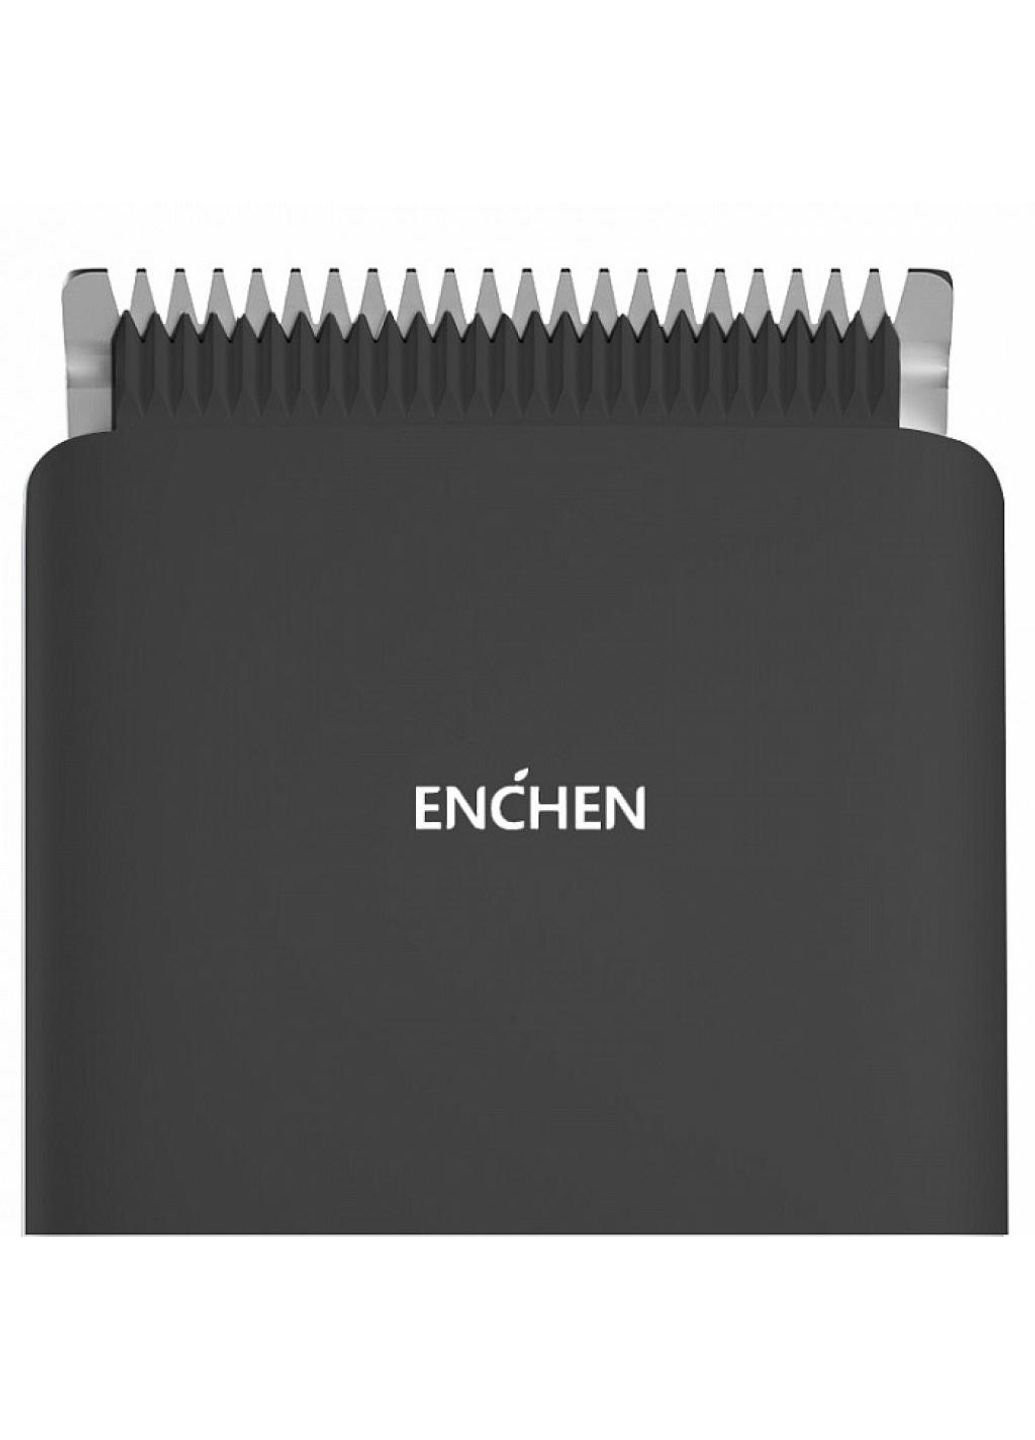 Машинка для стрижки Enchen Boost Black Xiaomi (252630202)